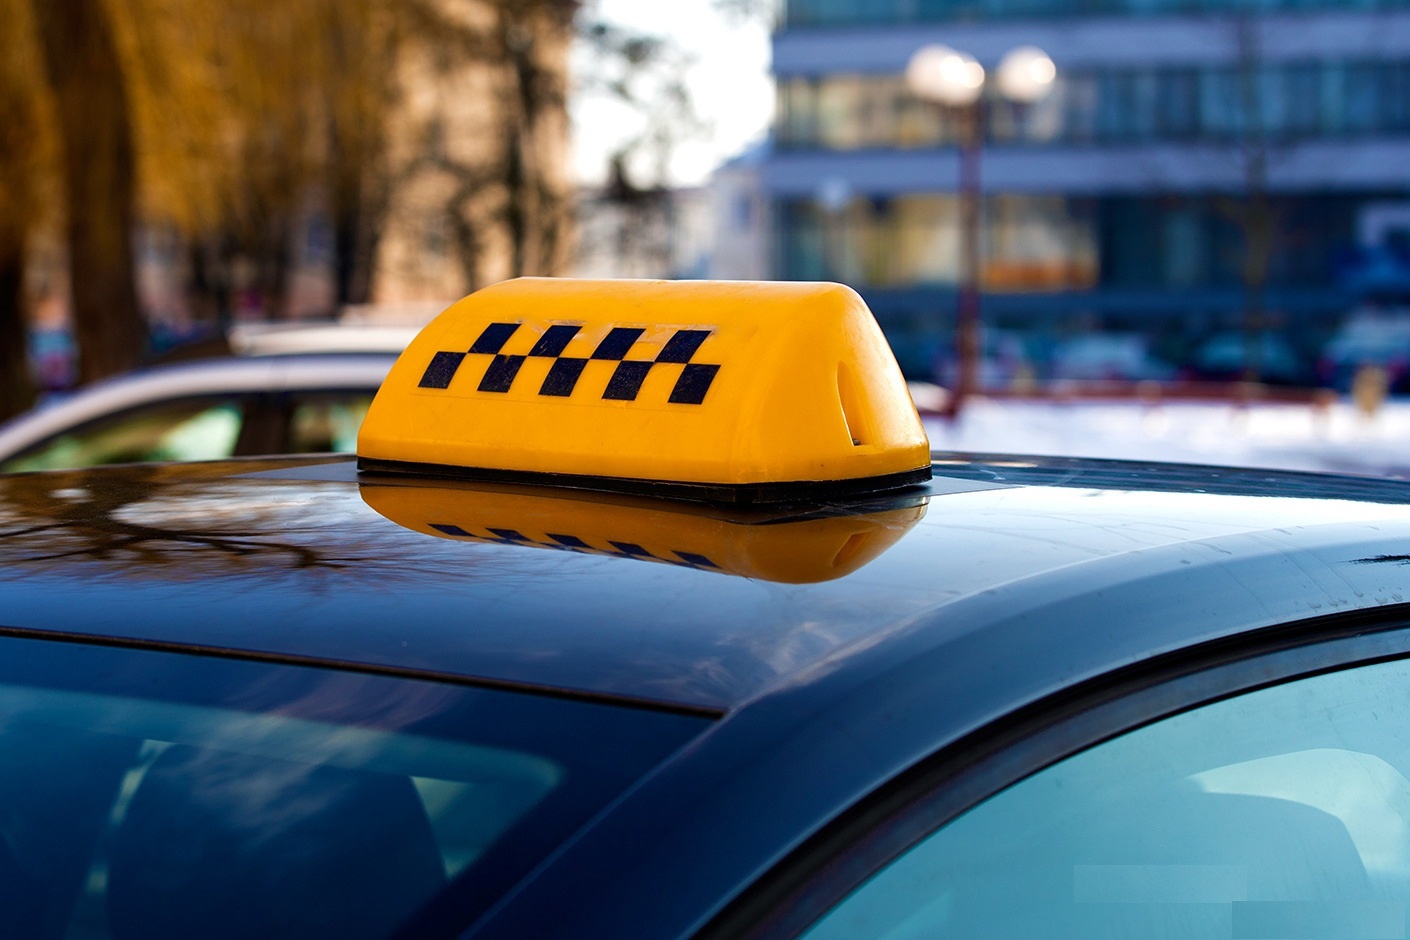 Предложение таксиста. Такси. Профилактическое мероприятие такси. Такси Кострома. Легковое такси.